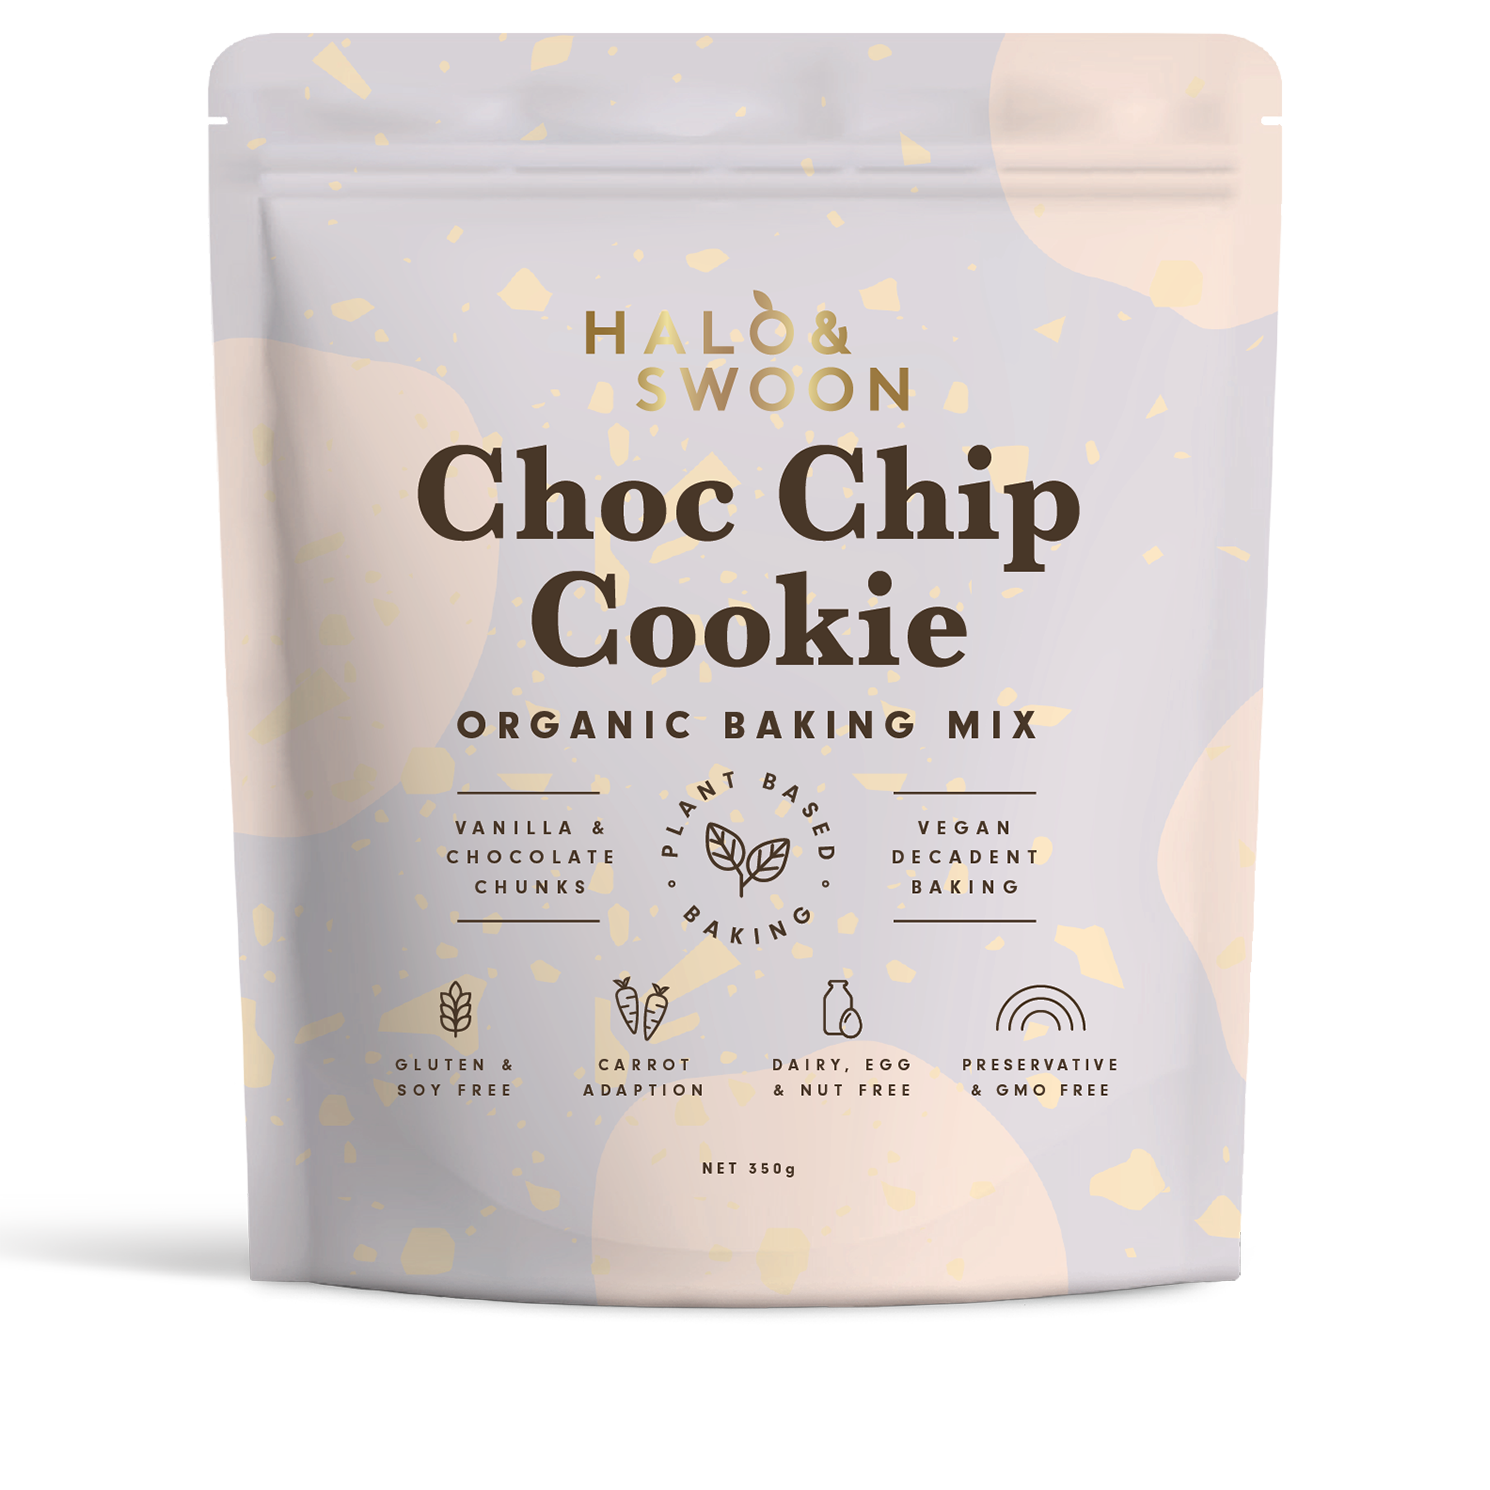 Halo & Swoon Choc Chip Cookie - organic, vegan, gluten-free baking mix